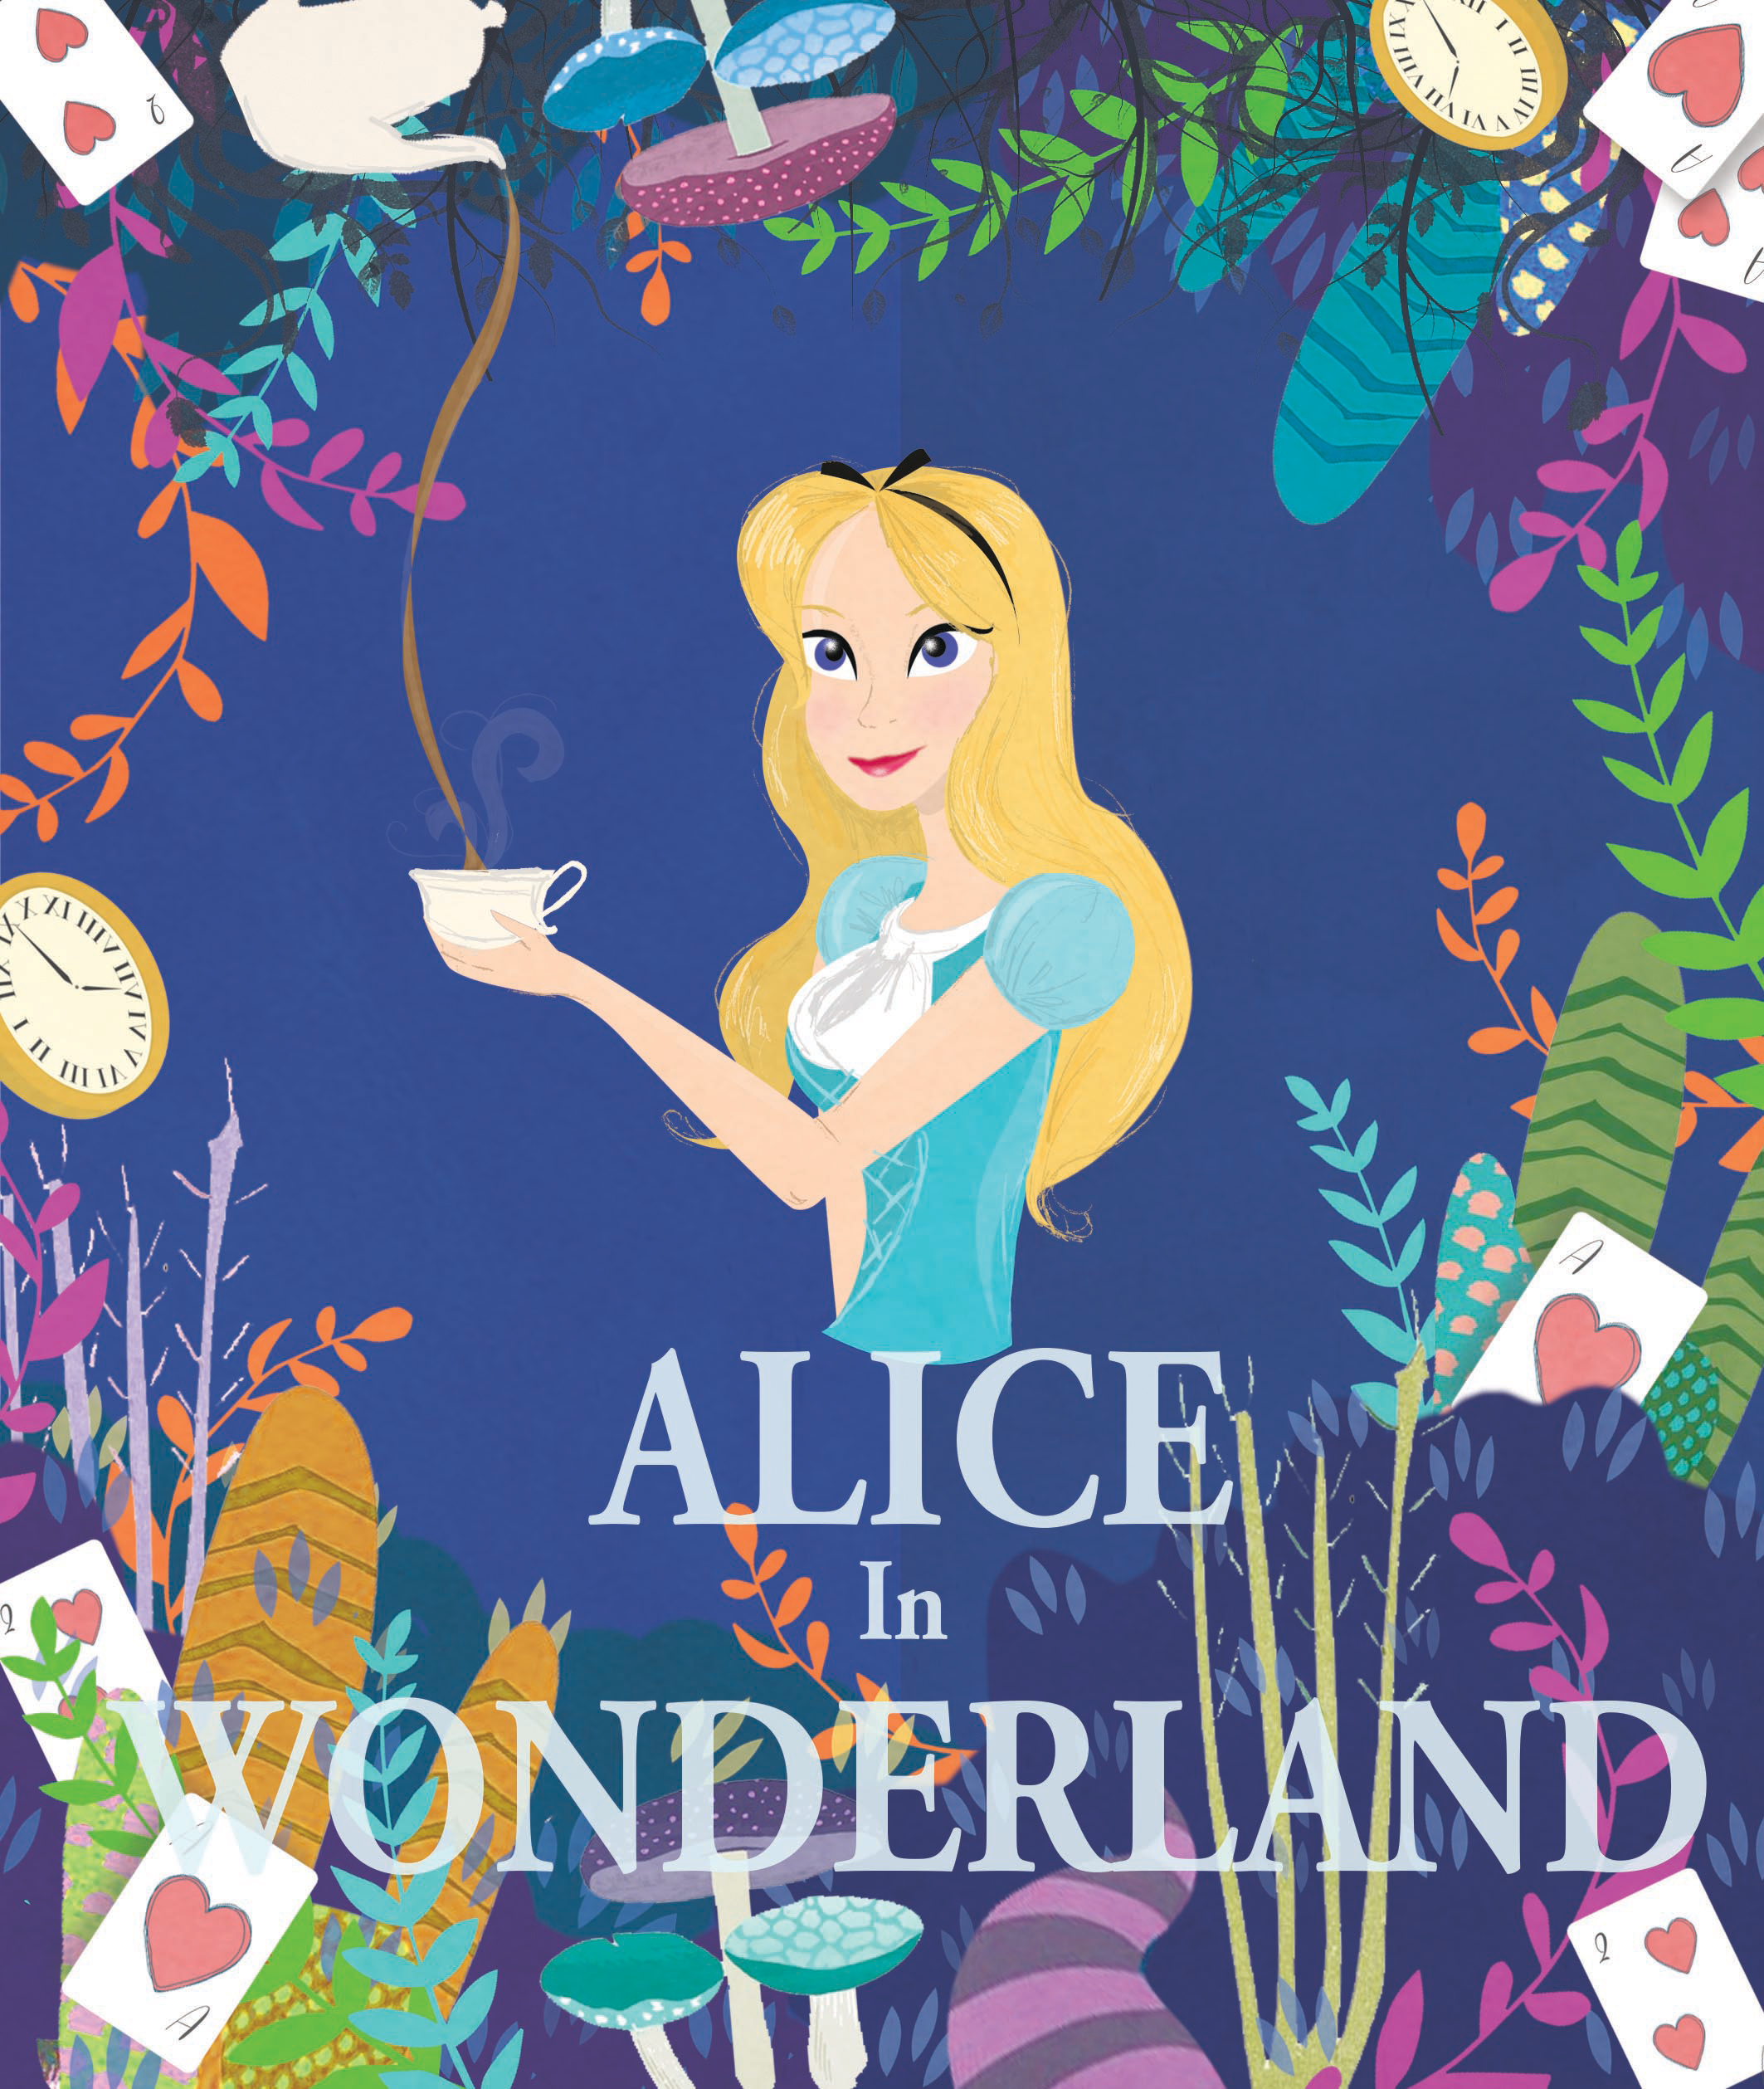 alice wonderland illustration